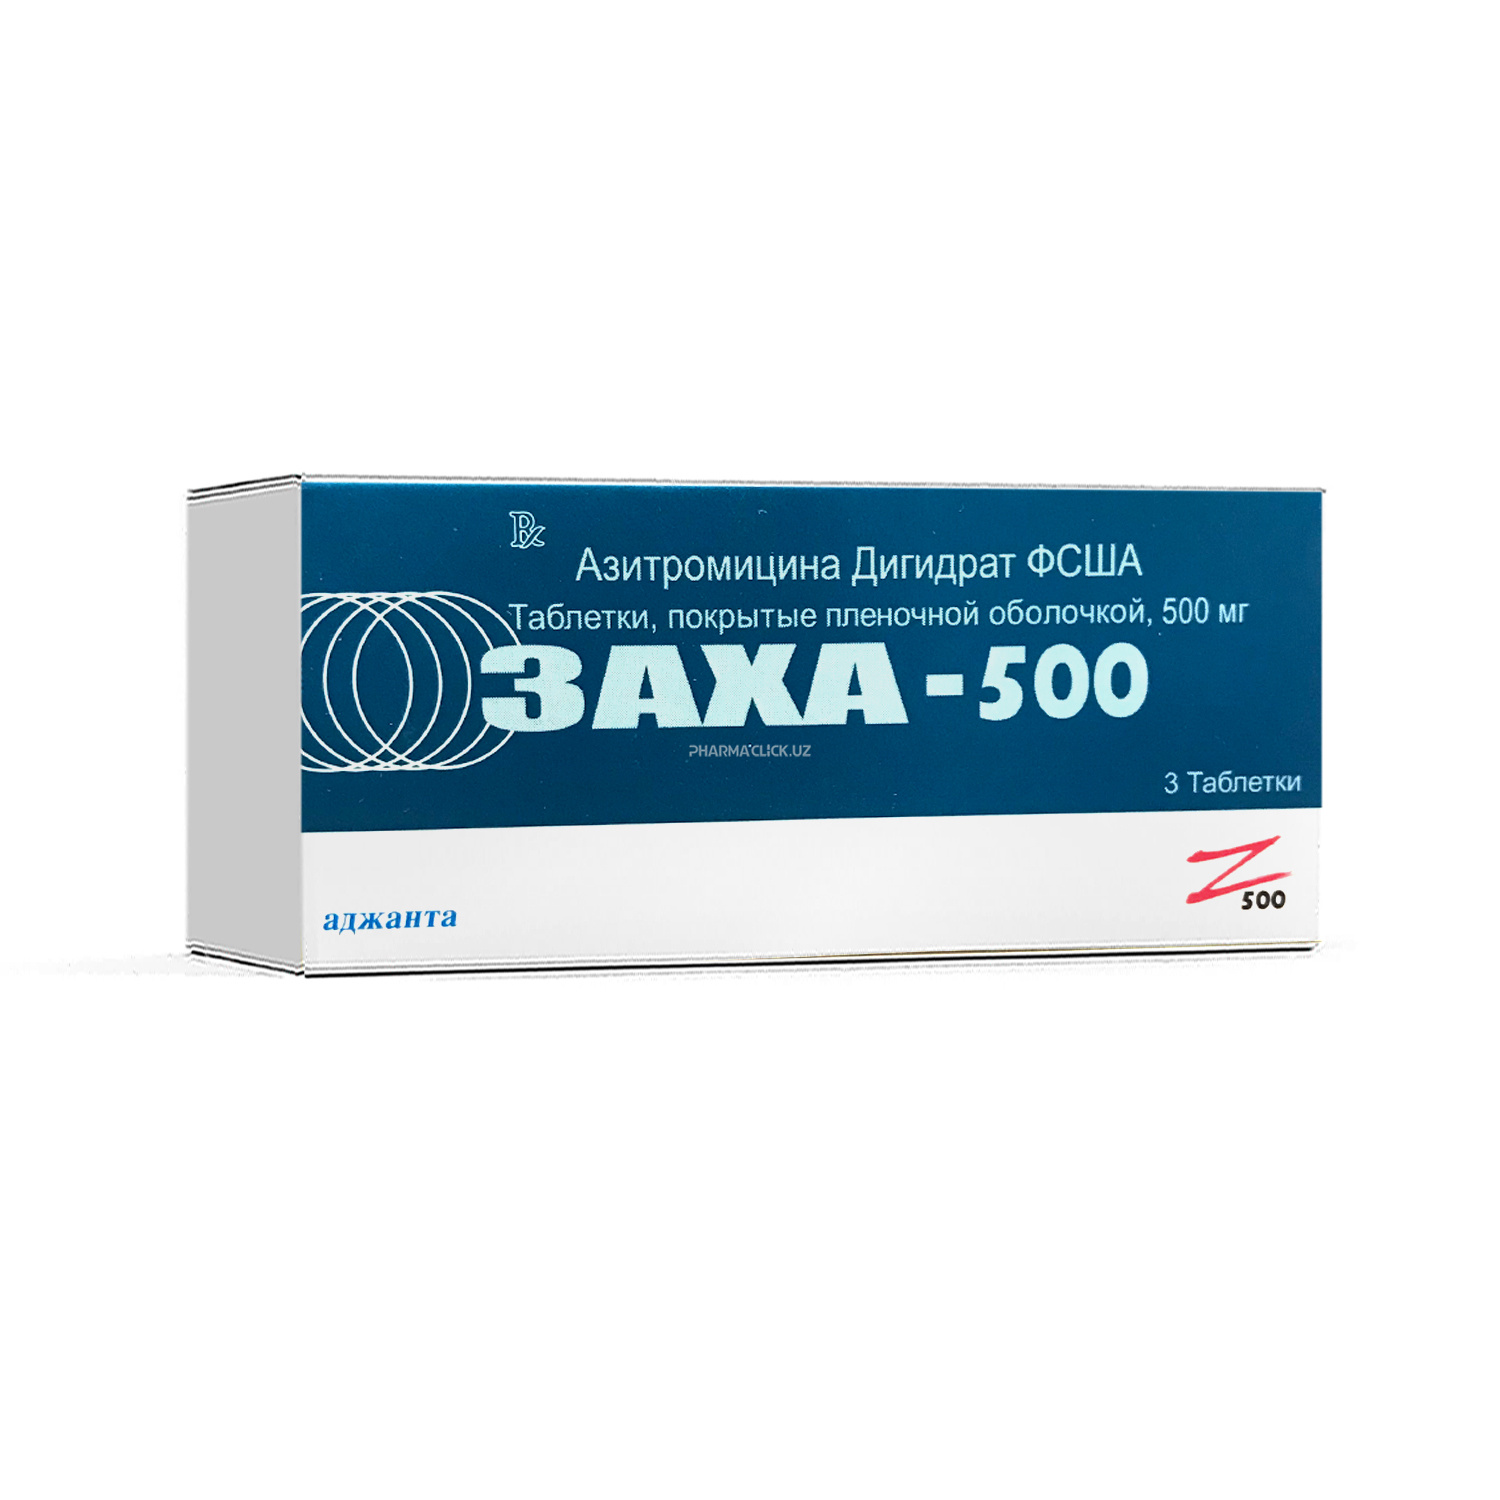 Zaxa 500 (azitromitsin) tab. 500mg №3